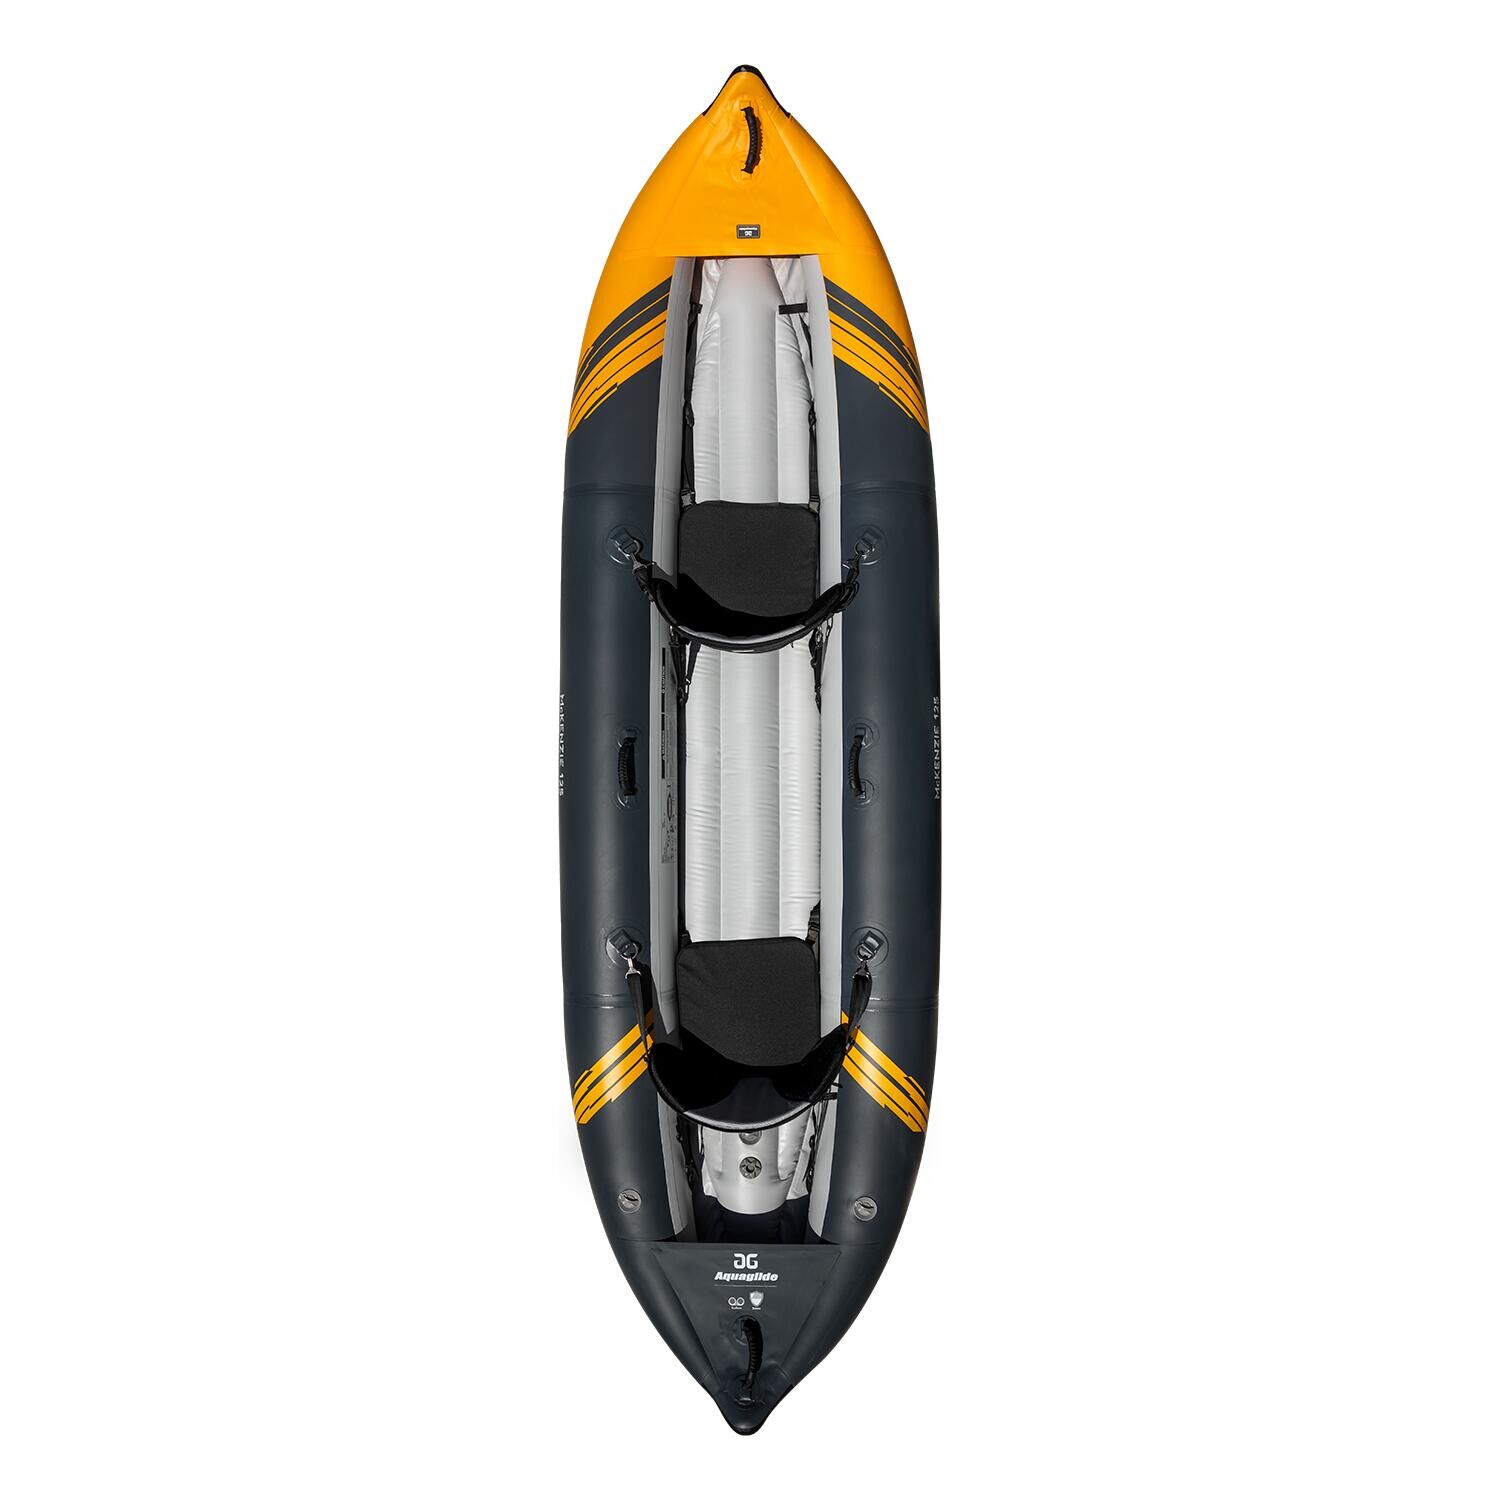 AQUAGLIDE McKenzie 125 - Inflatable Whitewater Kayak